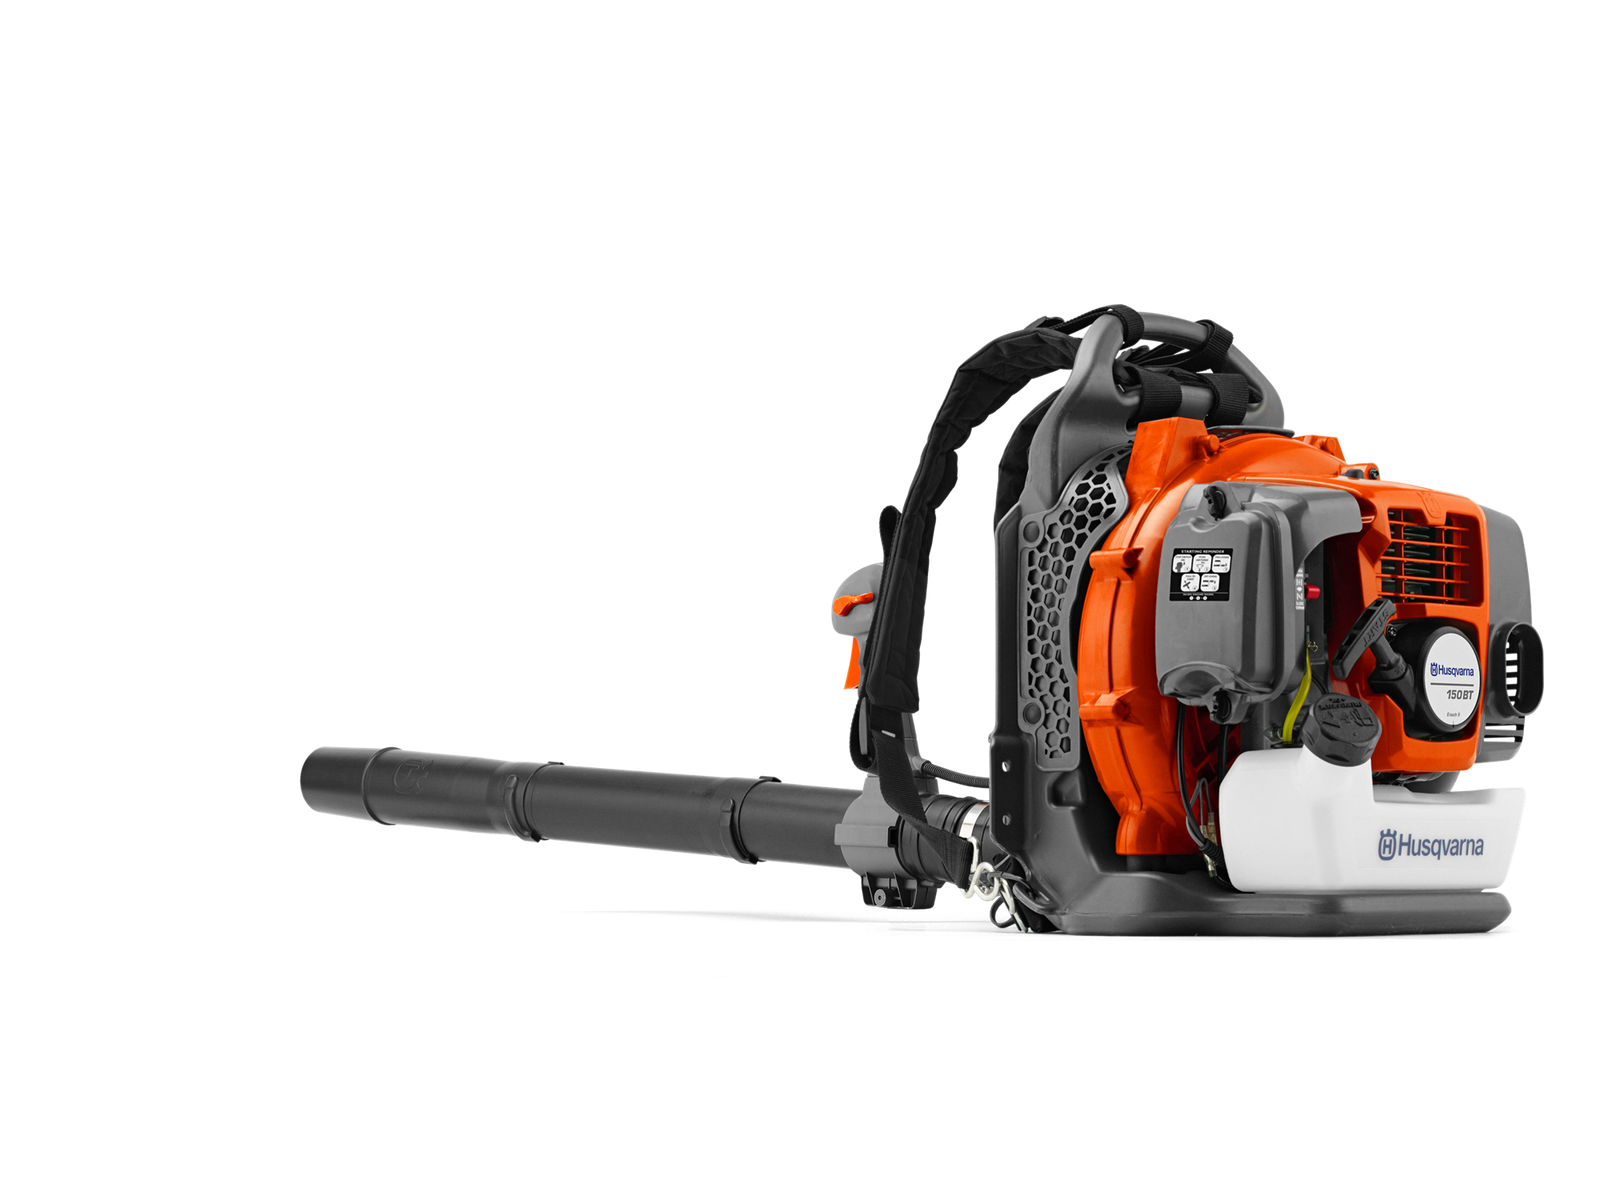 Husqvarna Husqvarna 150BT 50 cc backpack blower, 2.2 hp, 765 cfm/270 mph